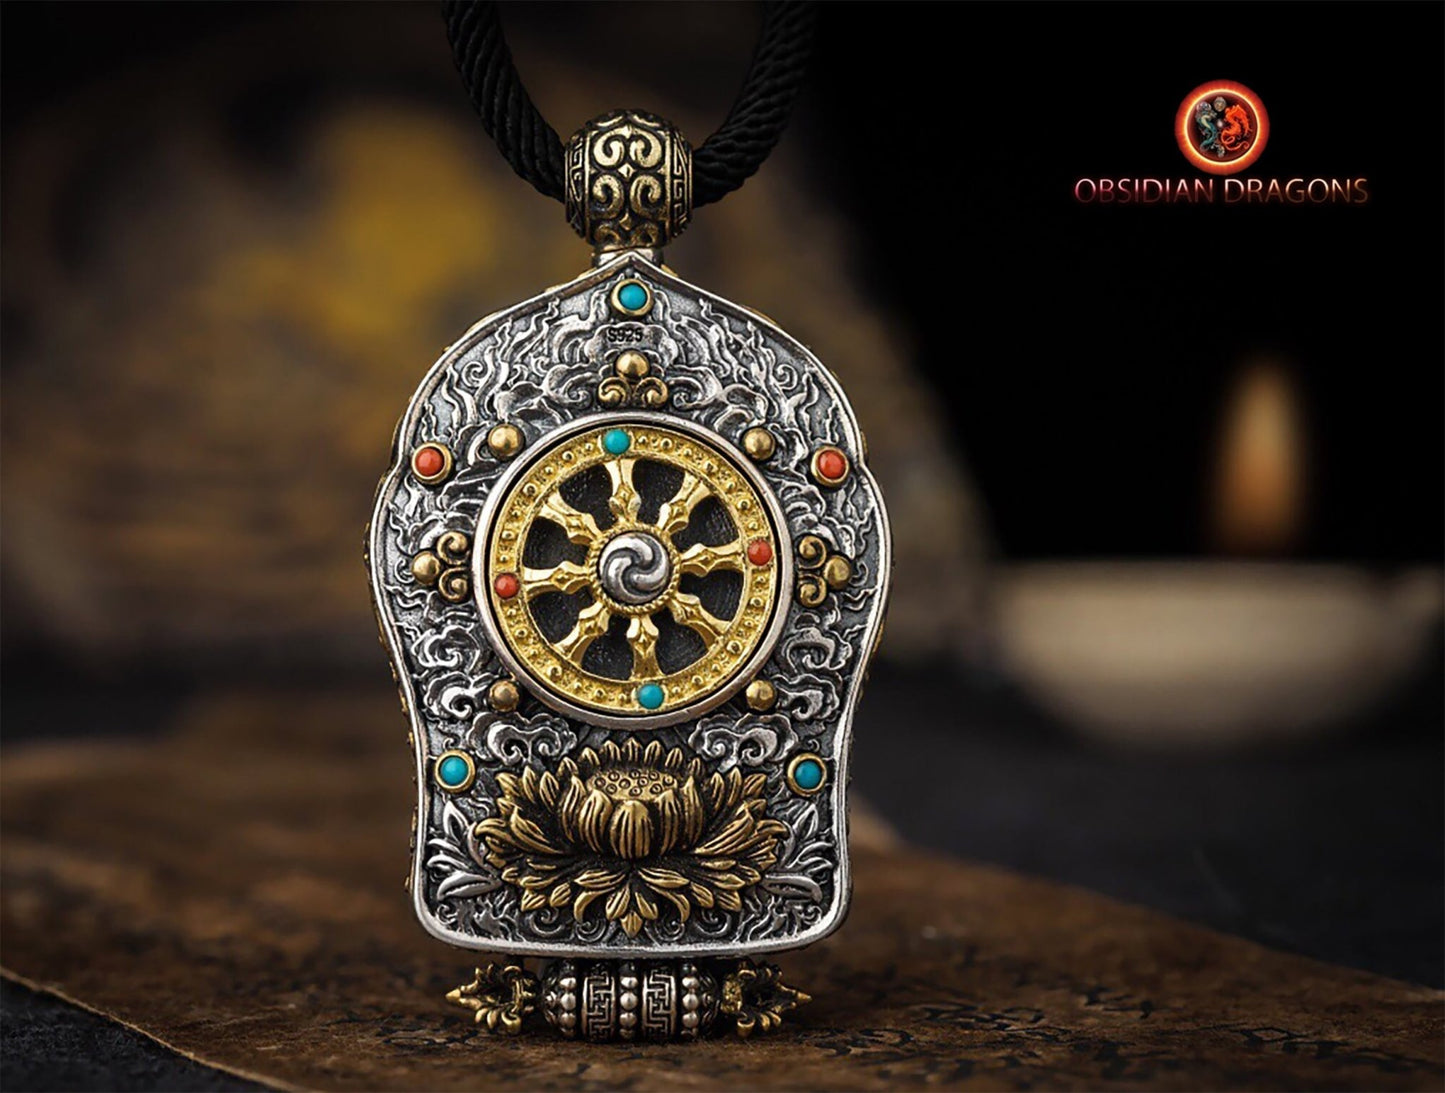 Pendentif Bouddha Amitabha. Ghau, amulette de protection tibétaine. Véritable tangka artisanal - obsidian dragon